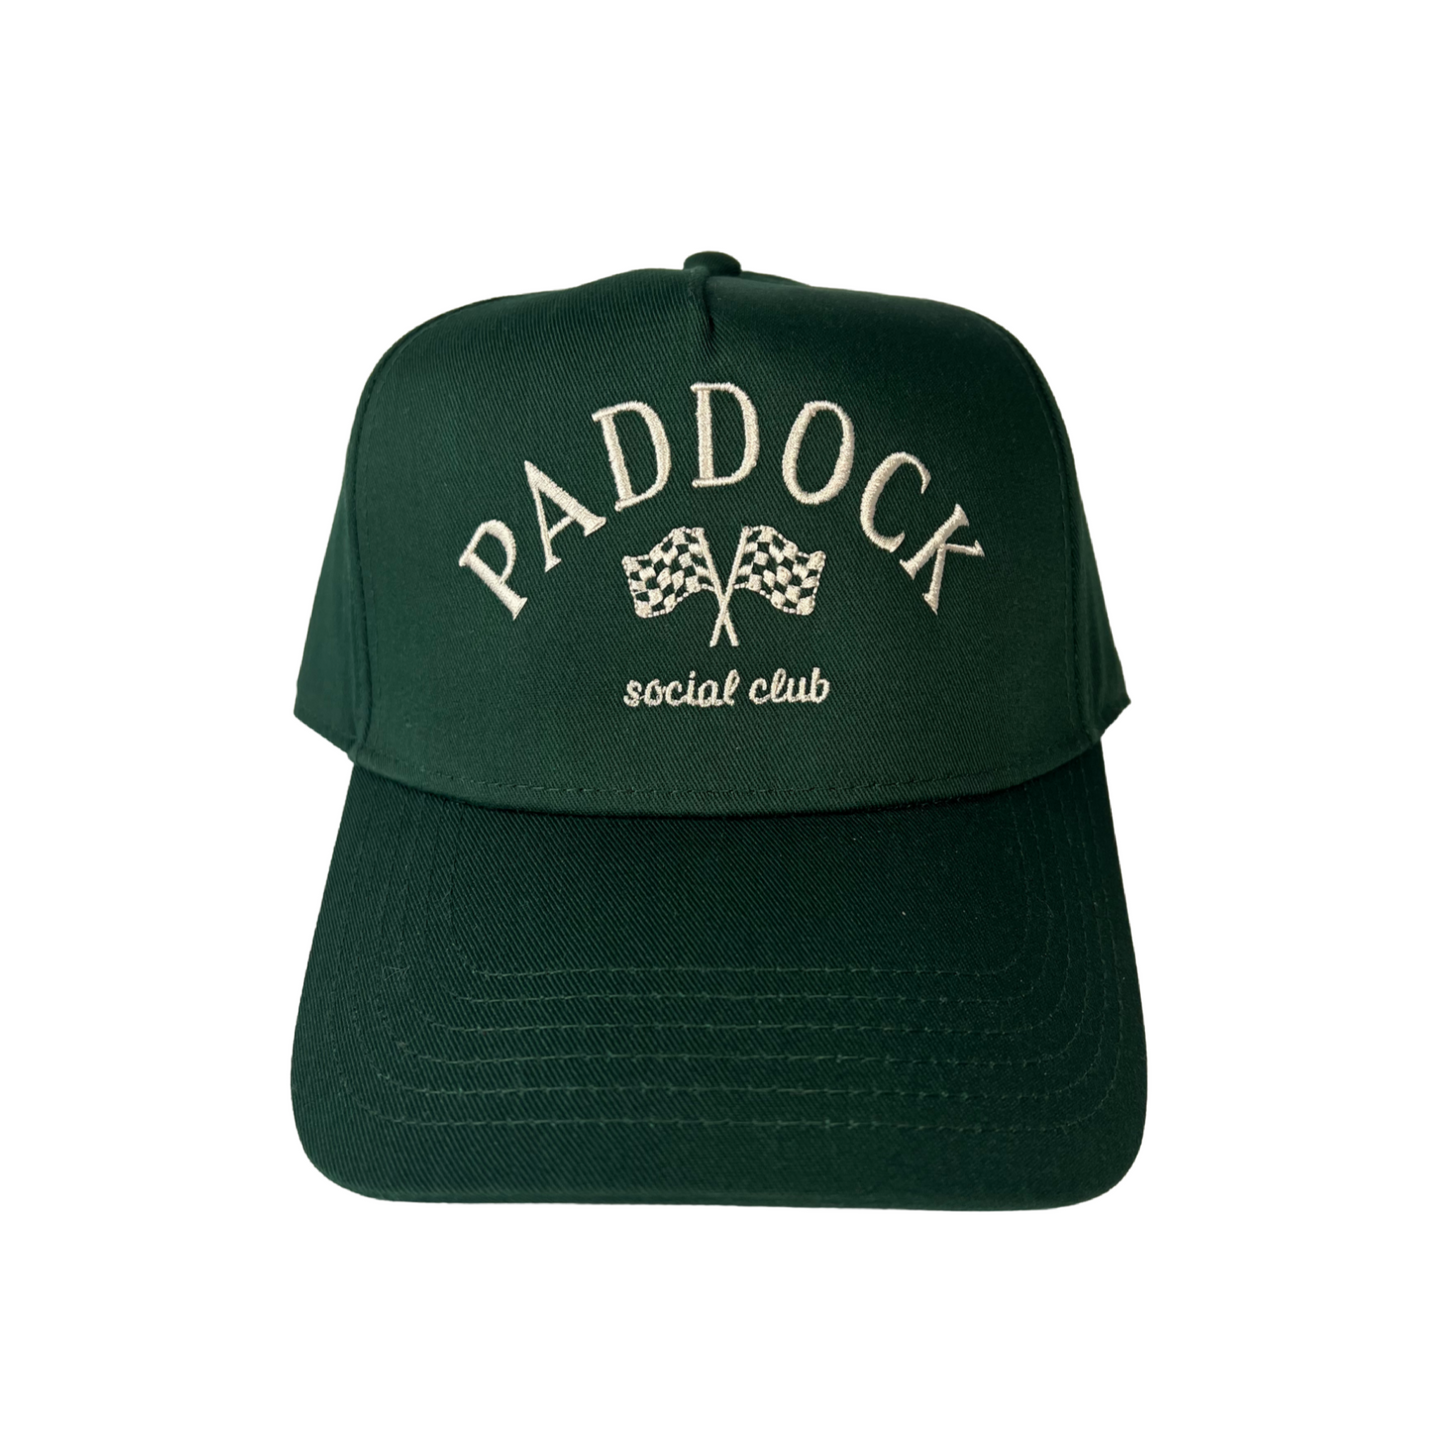 Paddock Social Club Hat - Green + Tan